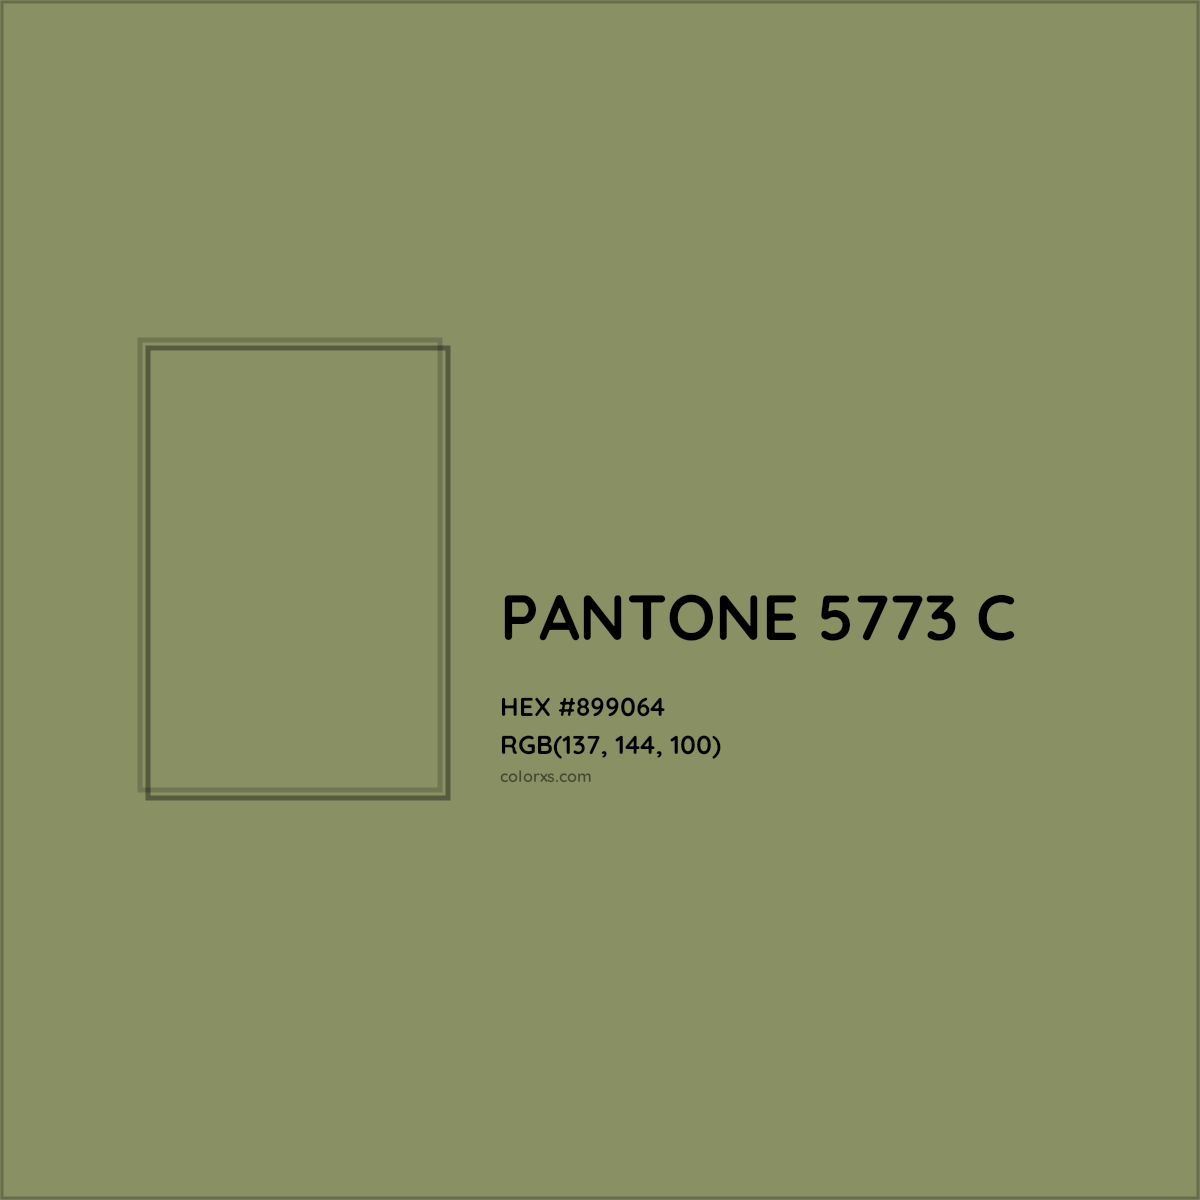 HEX #899064 PANTONE 5773 C CMS Pantone PMS - Color Code